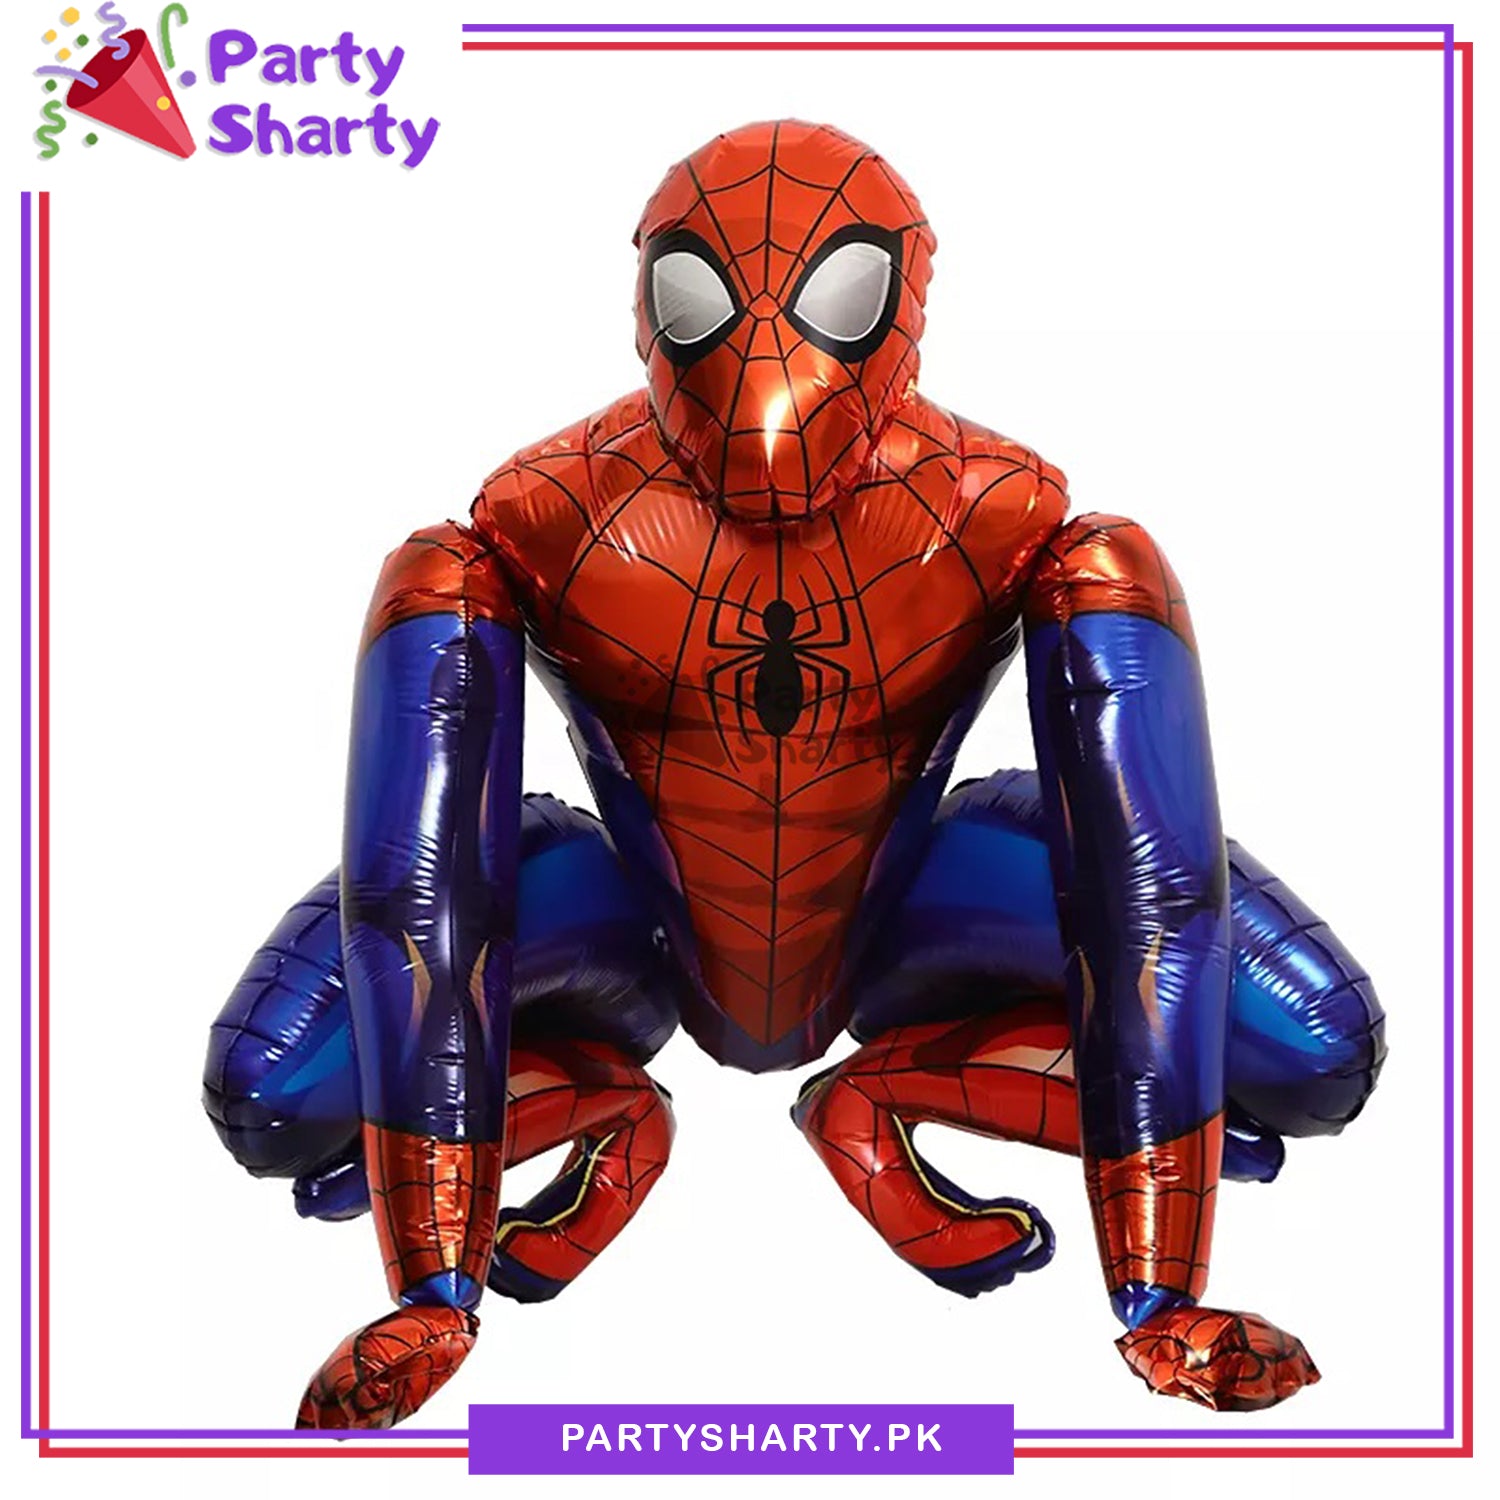 Large 4D Super Hero Marvel Spiderman / Batman / Iron Man Character